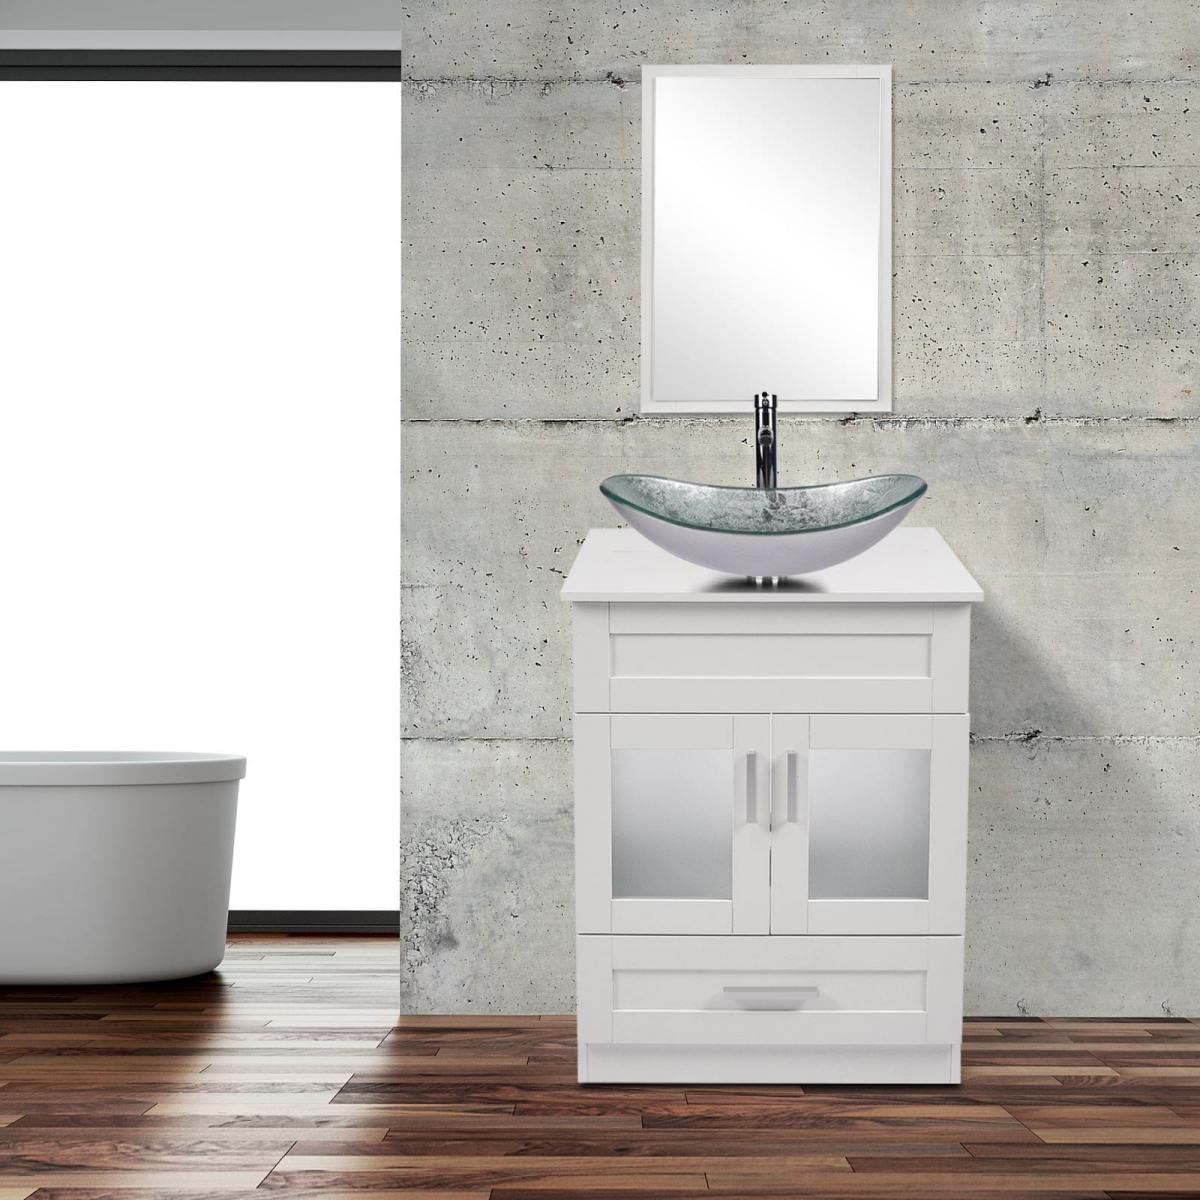 Elecwish White Bathroom Vanity with Silver Boat Sink Set BA1001-WH display scene